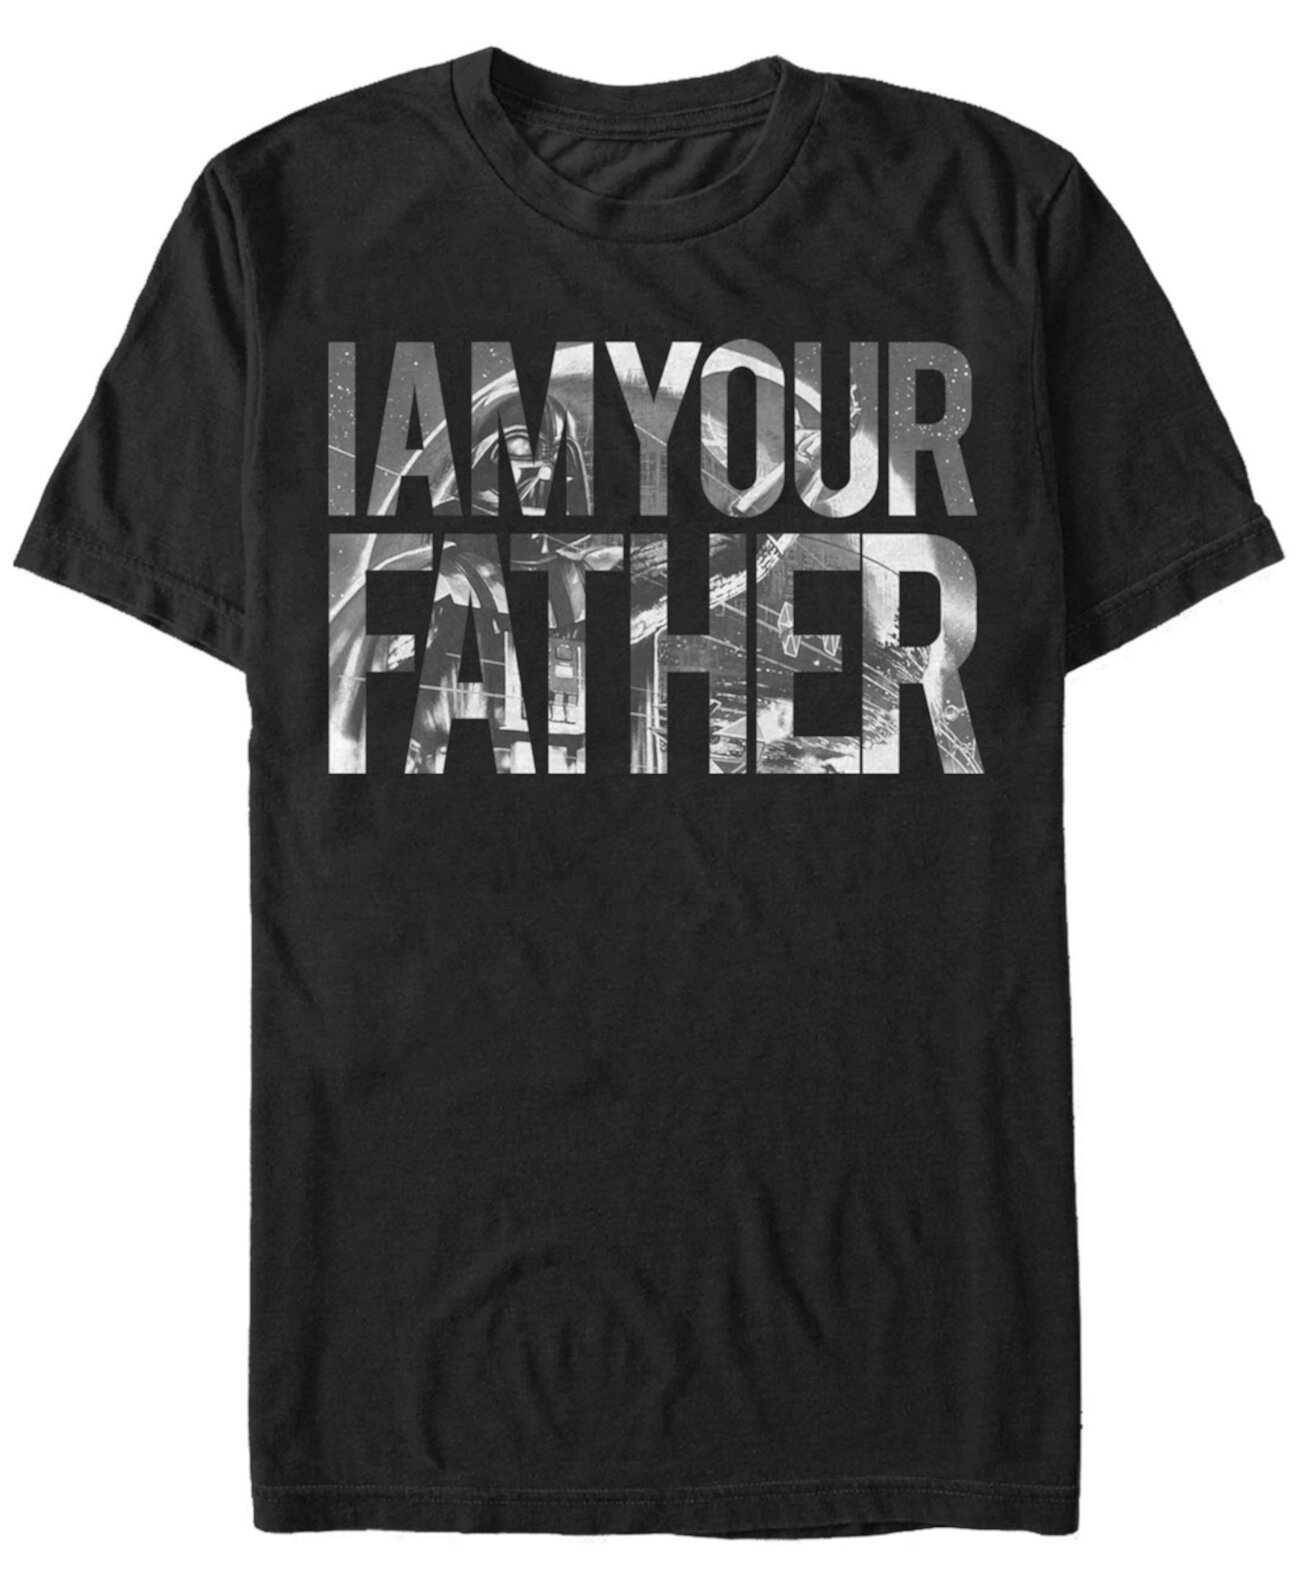 Мужская футболка Star Wars Vader "Я твой отец Арт Филл" с коротким рукавом FIFTH SUN